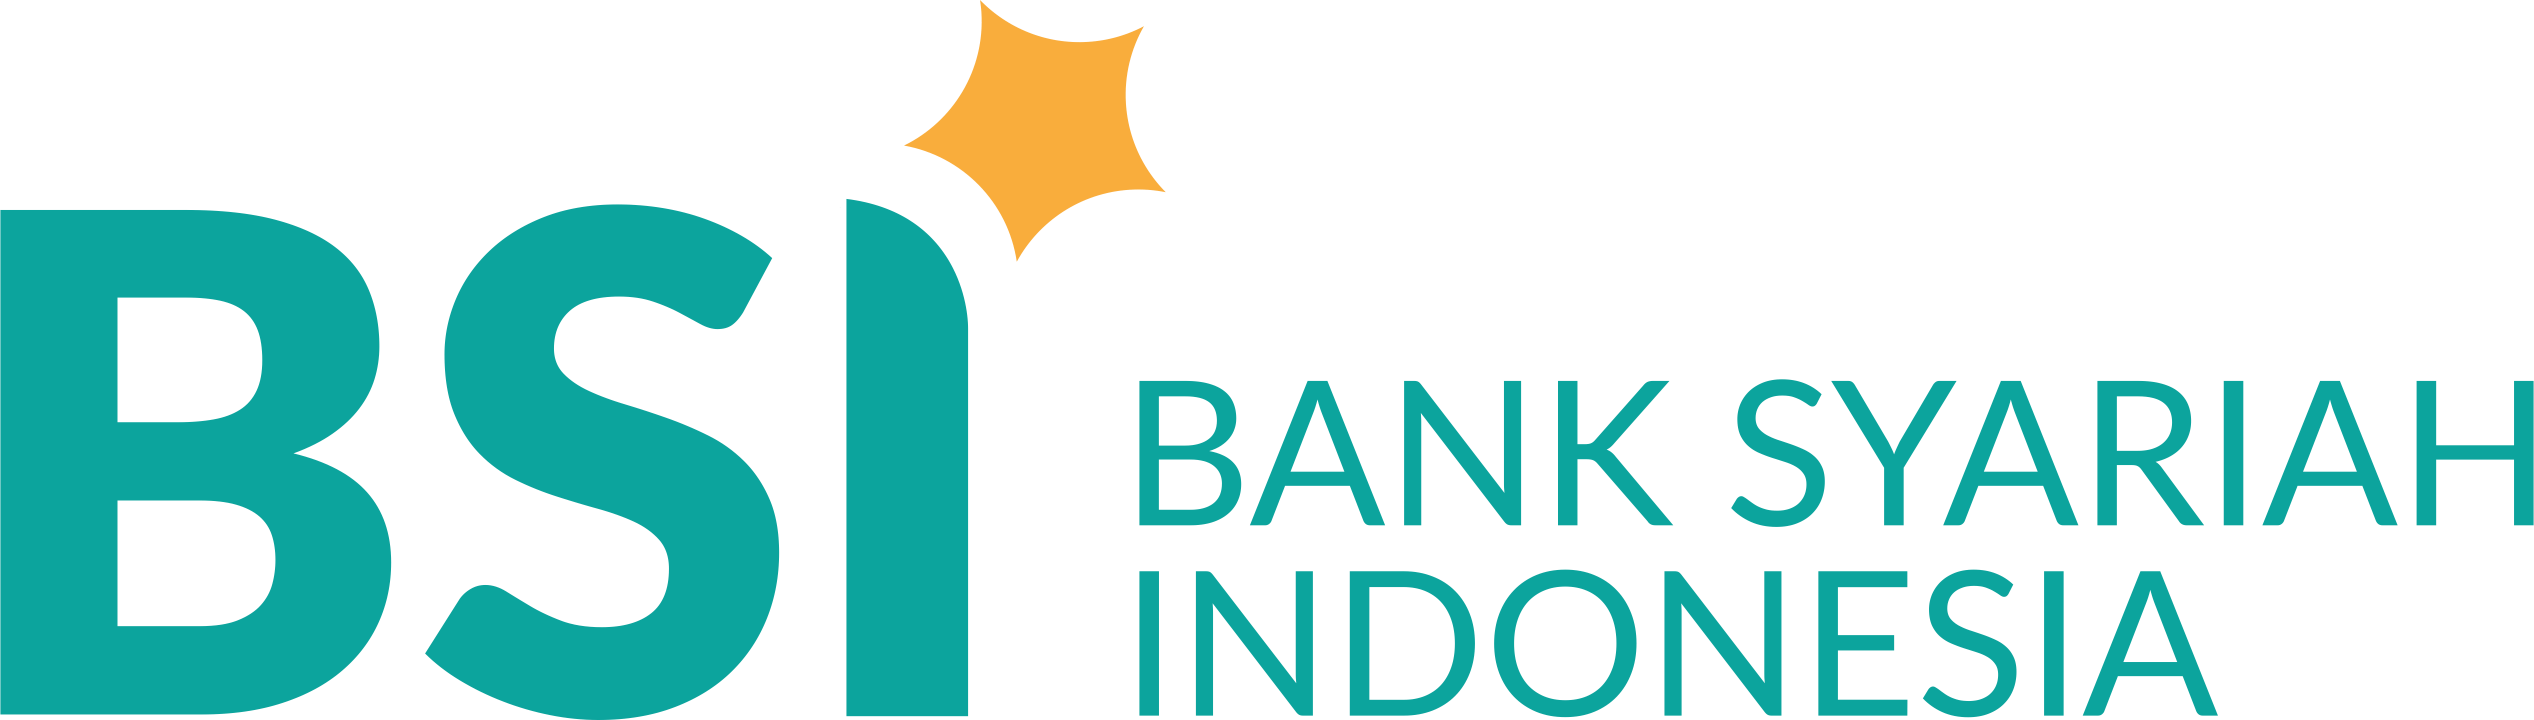 BSI-Bank-Syariah-Indonesia-Logo-PNG720p-Vector69Com